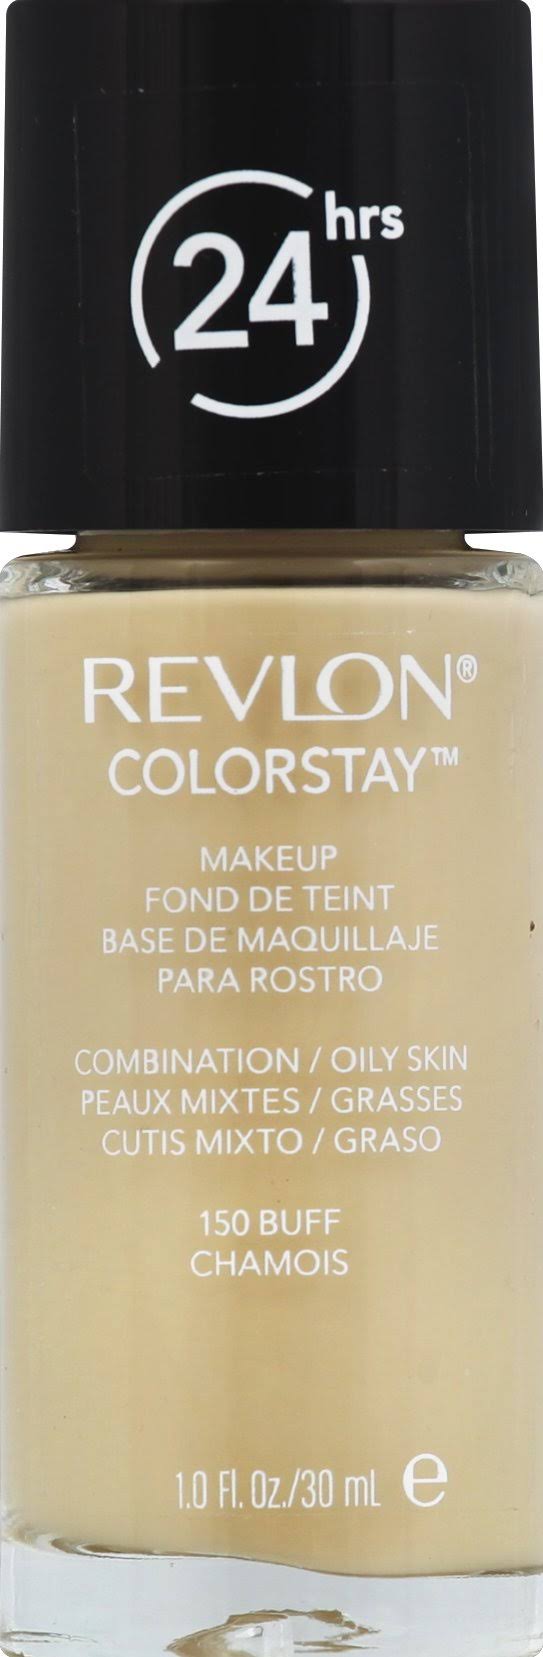 Revlon ColorStay Makeup - Buff